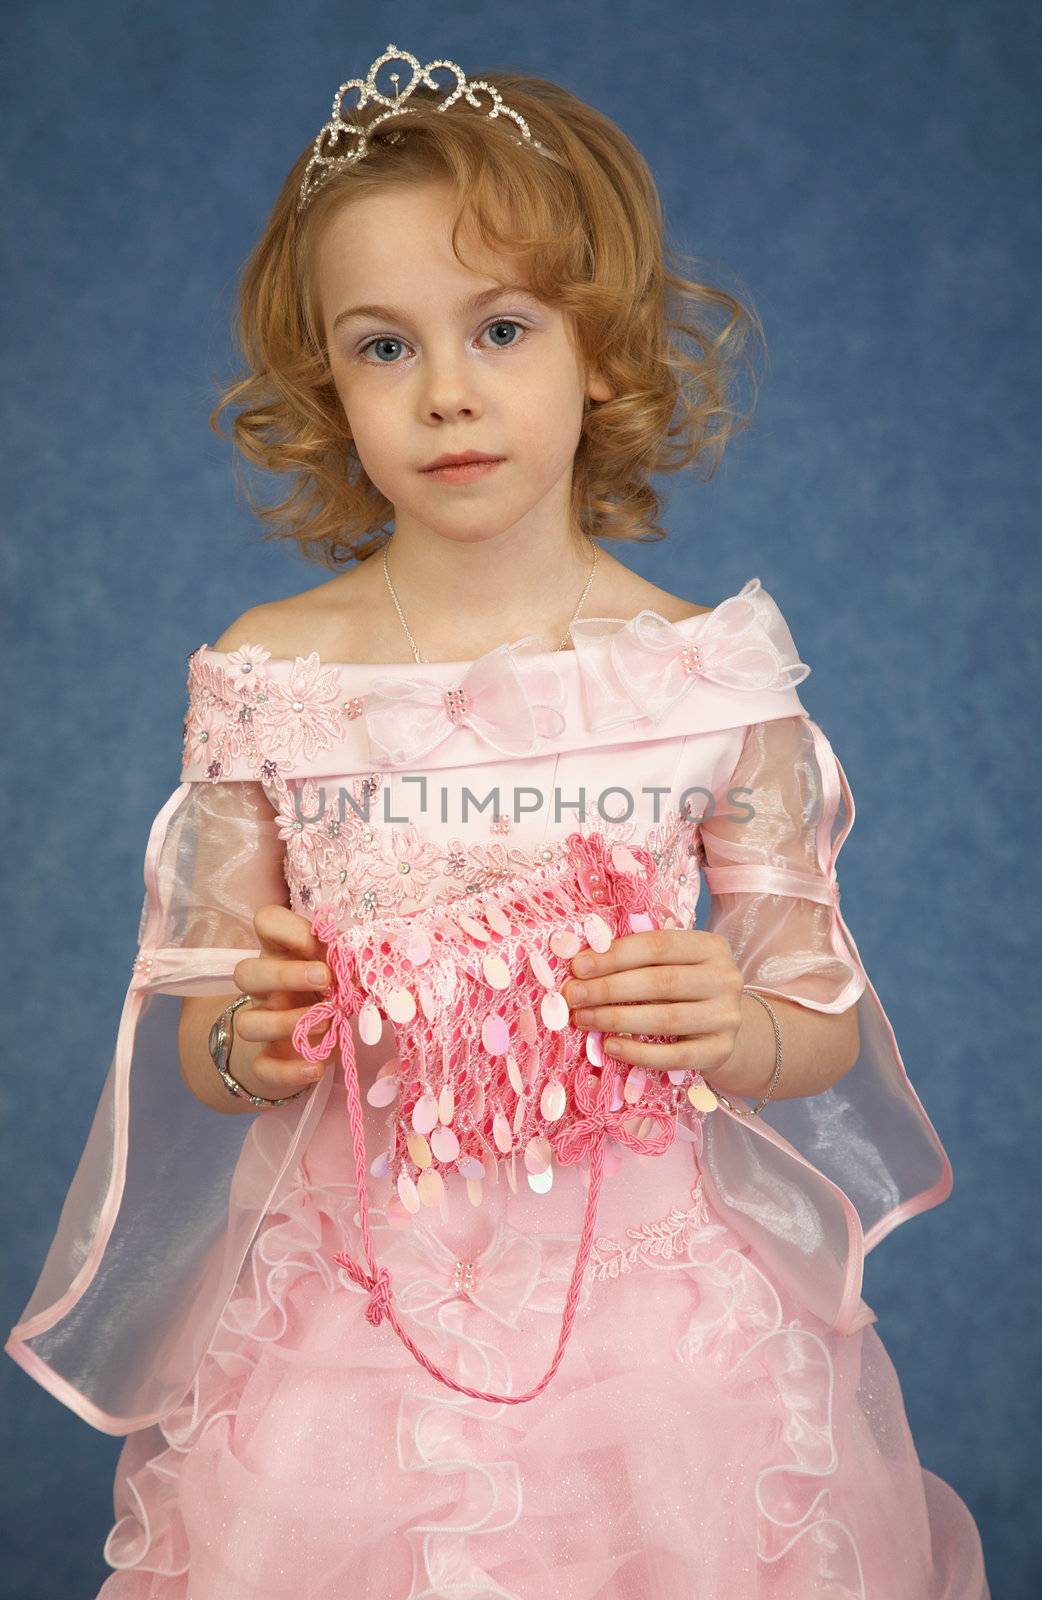 Beautiful girl in pink dress by pzaxe